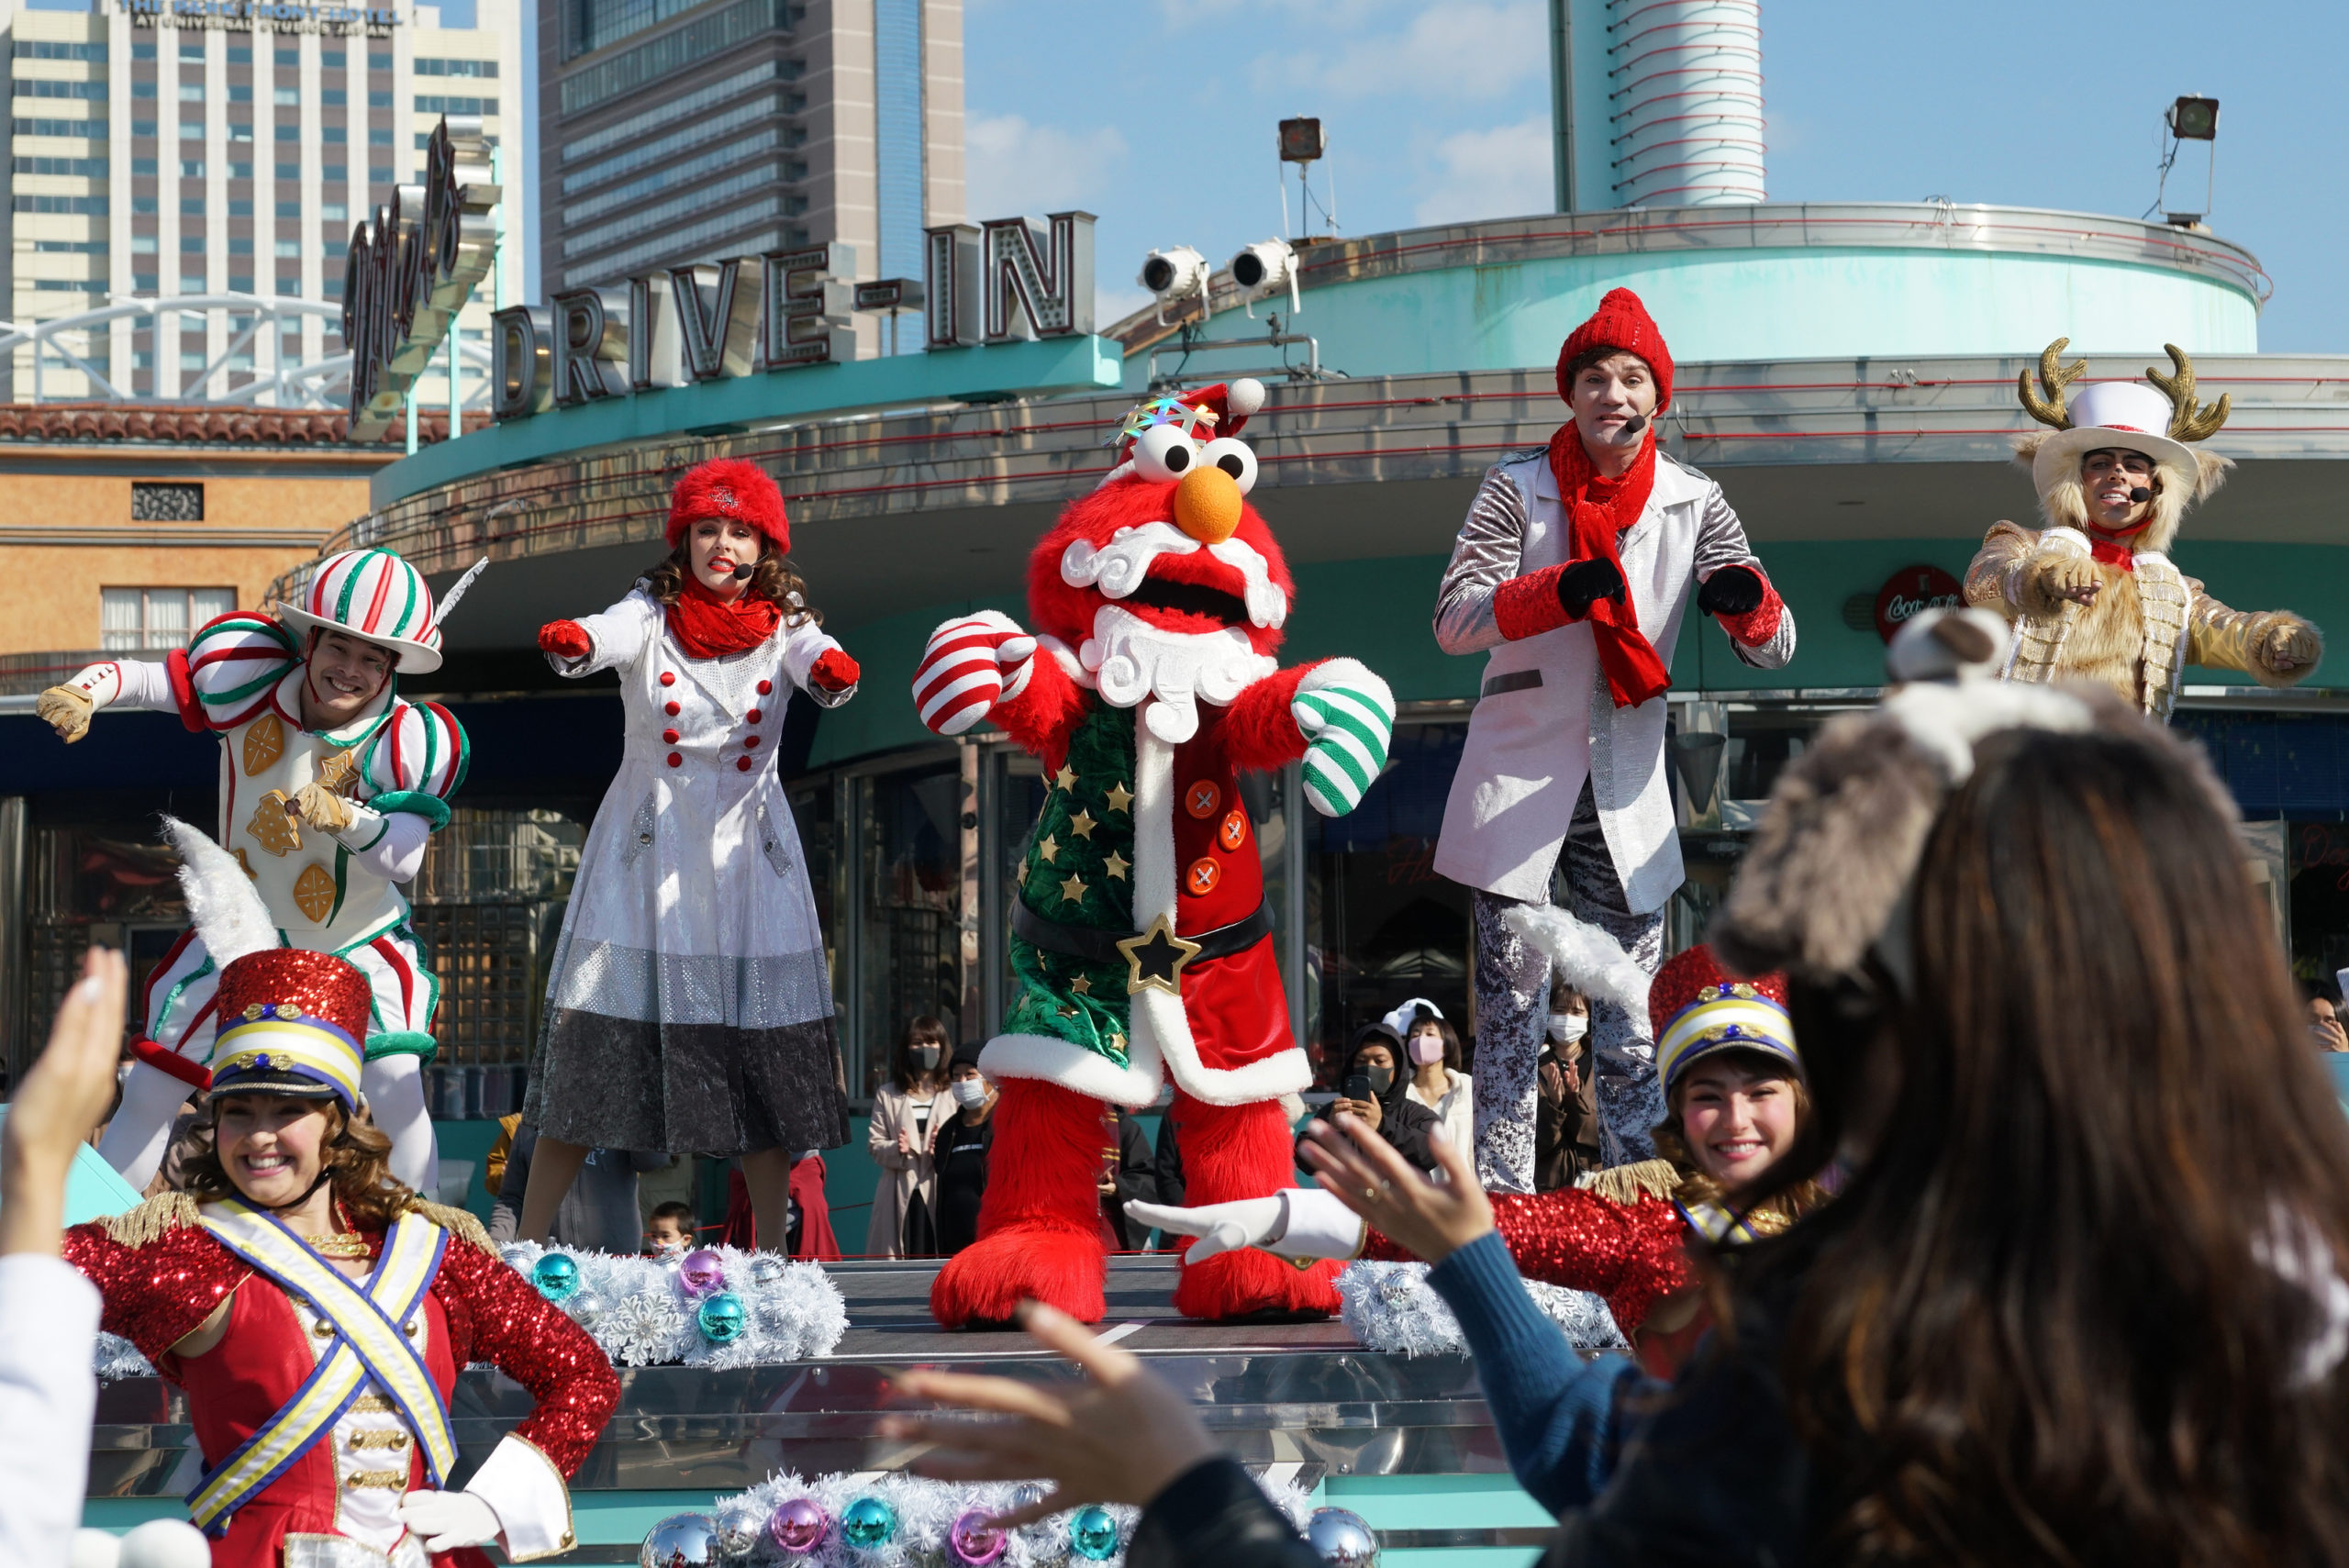 Usjのキャラクターがクリスマス衣装で大集合 一緒に踊って楽しむ ハッピー クリスマス ストリート パーティー あとなびマガジン